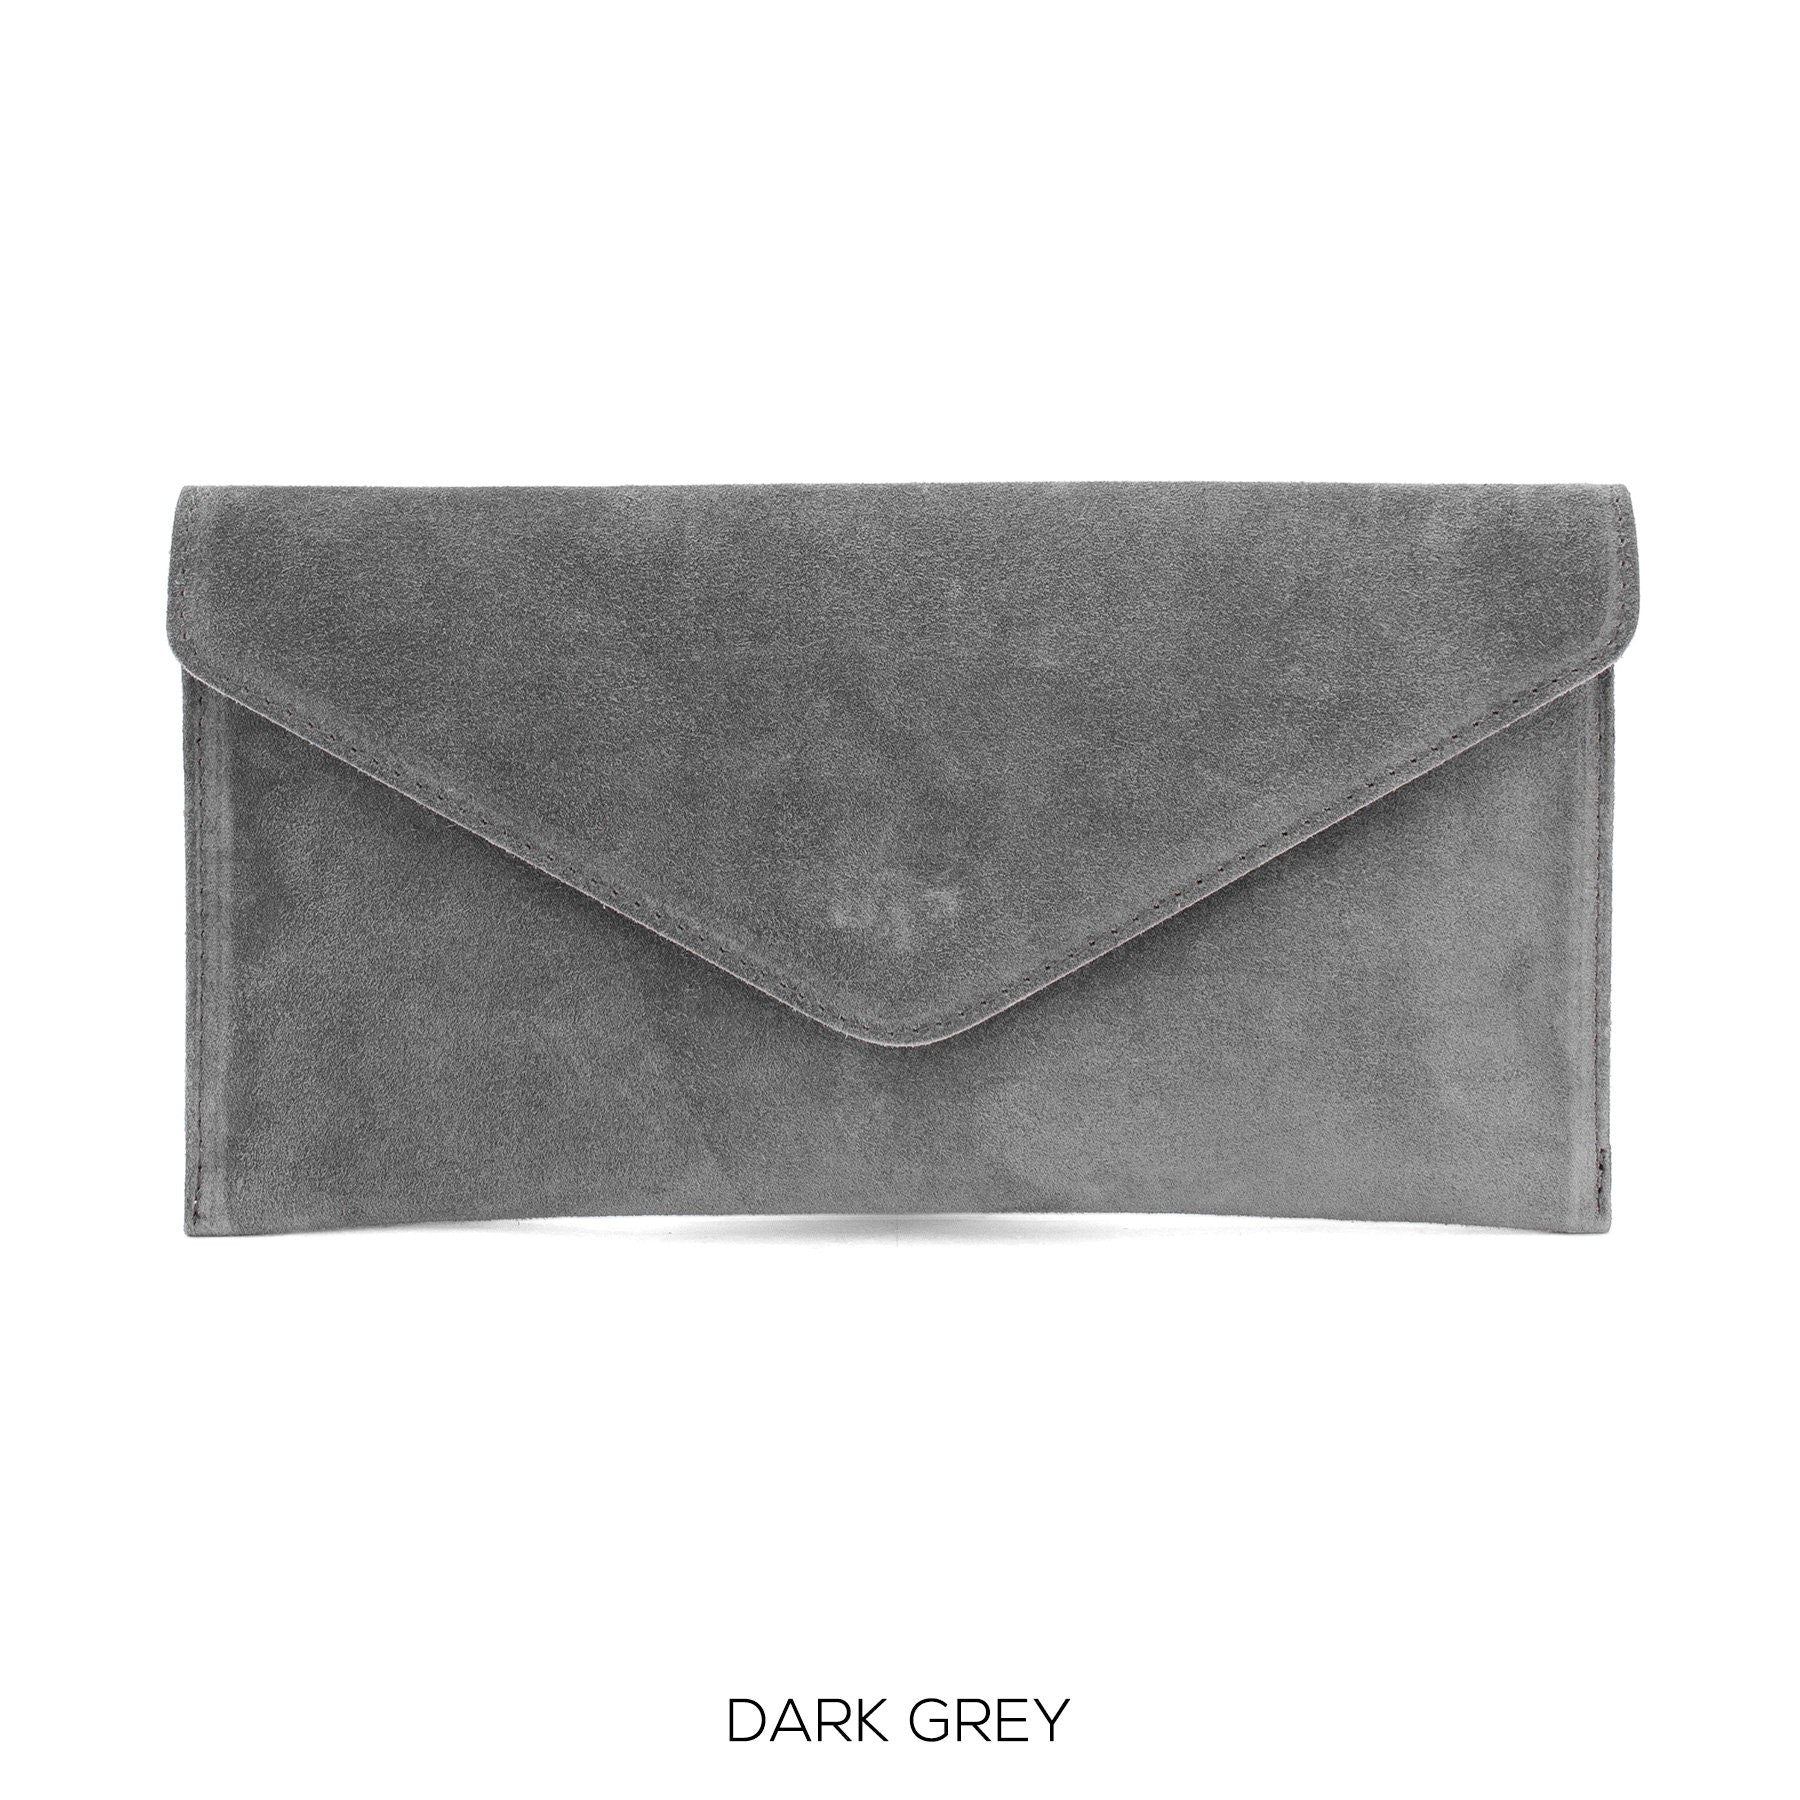 Dark Grey envelope clutch bag